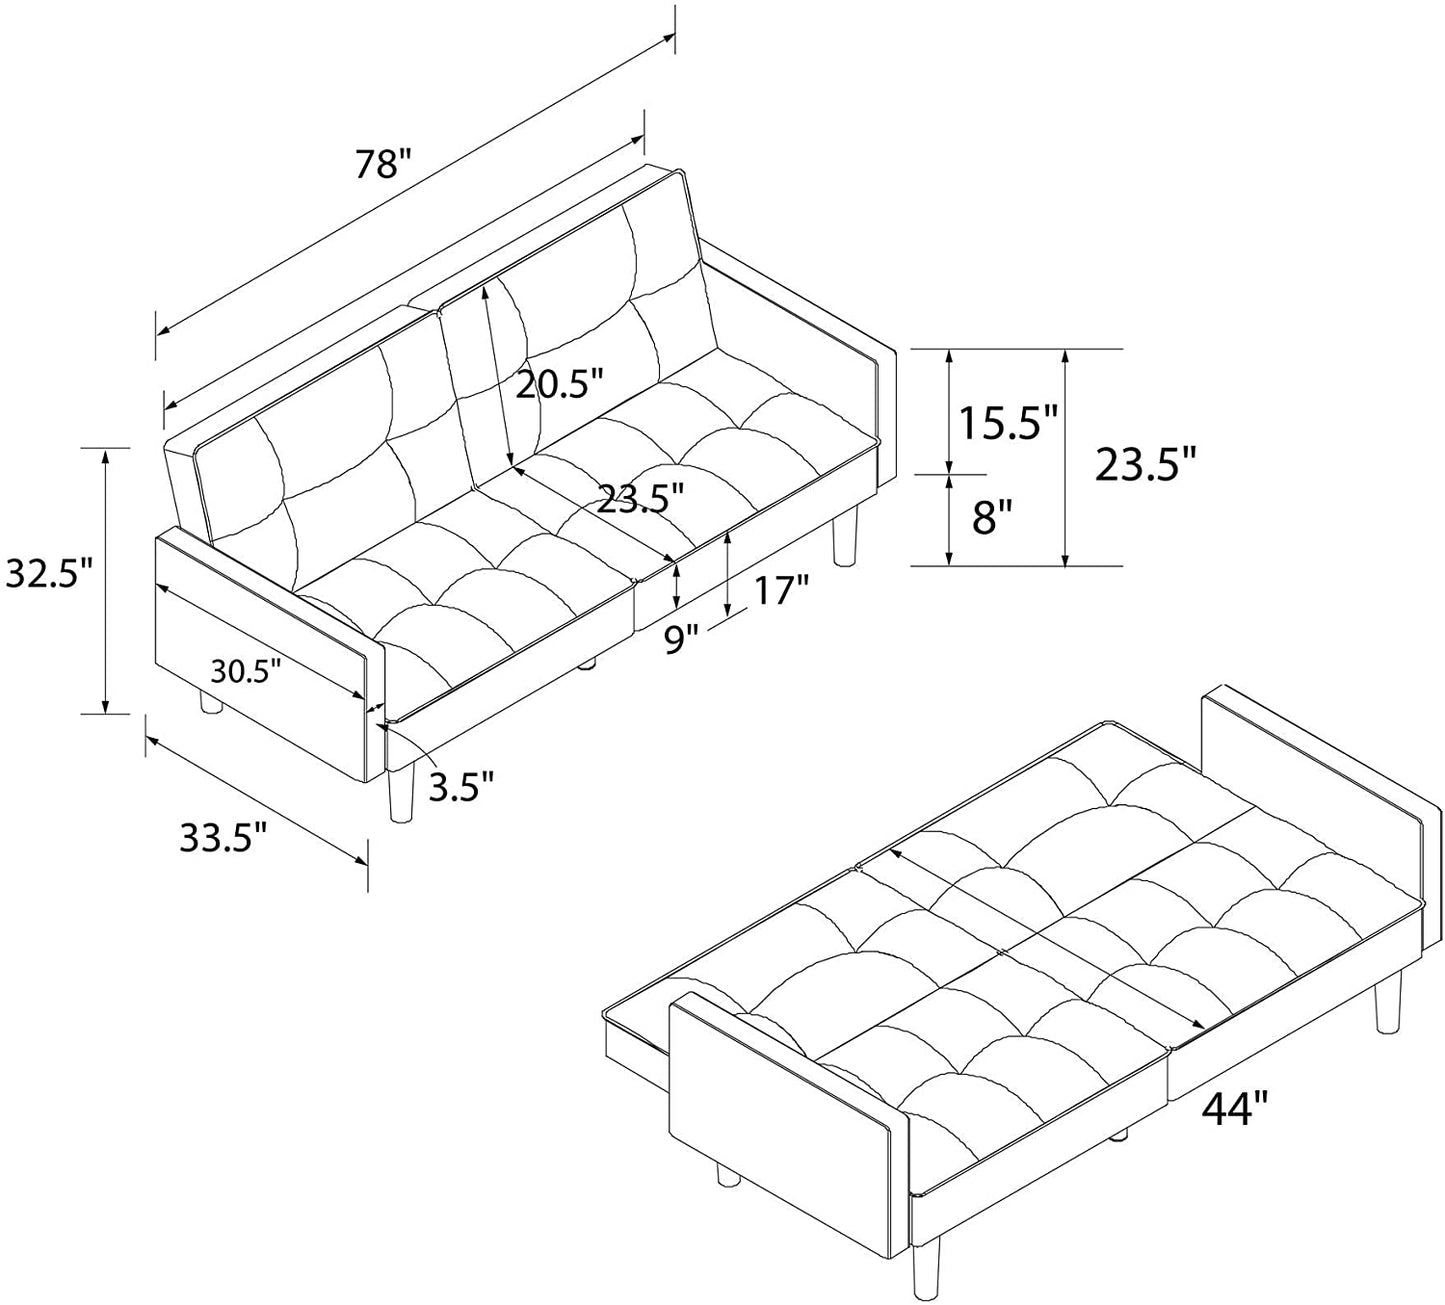 Hayden Convertible Sofa Sleeper Futon with Arms - Grey Microfiber